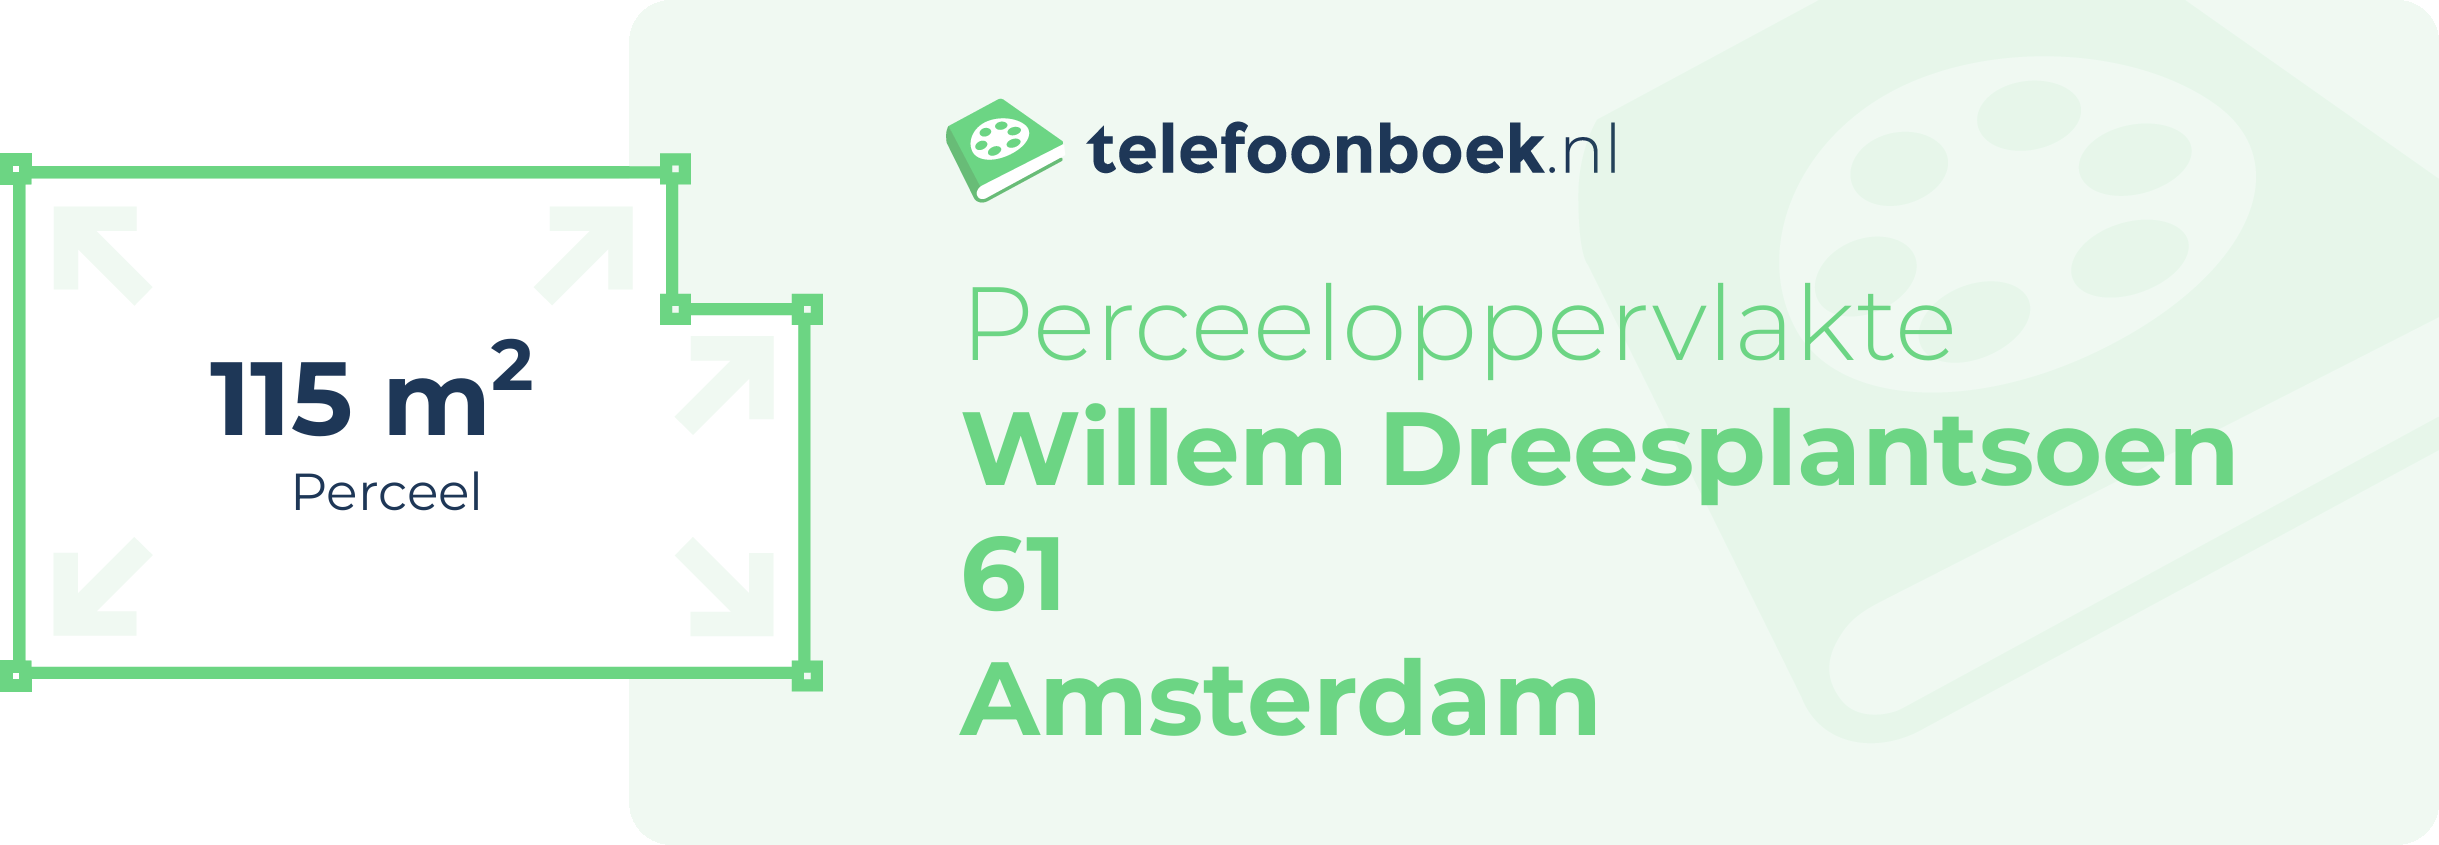 Perceeloppervlakte Willem Dreesplantsoen 61 Amsterdam